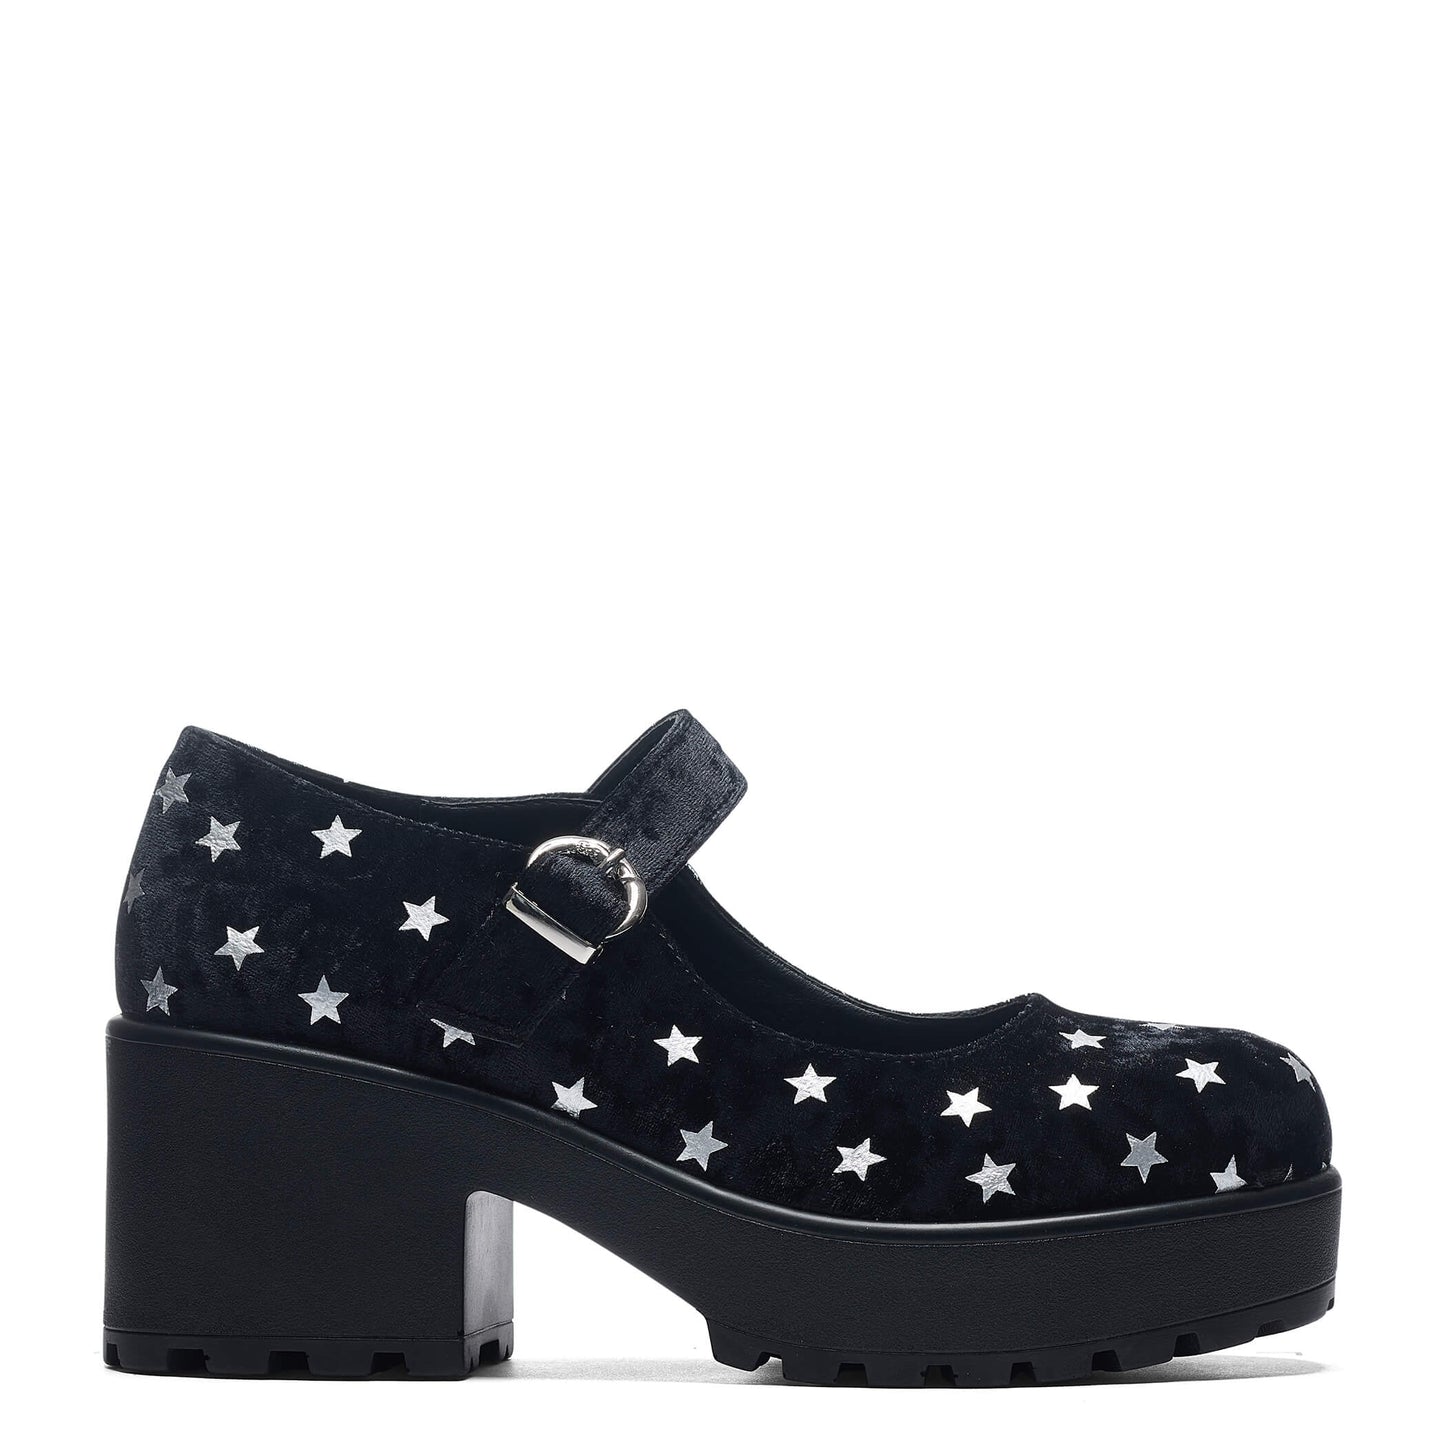 Tira Night Sky Mary Janes 'Celestial Dusk Edition' - Mary Janes - KOI Footwear - Black - Main View